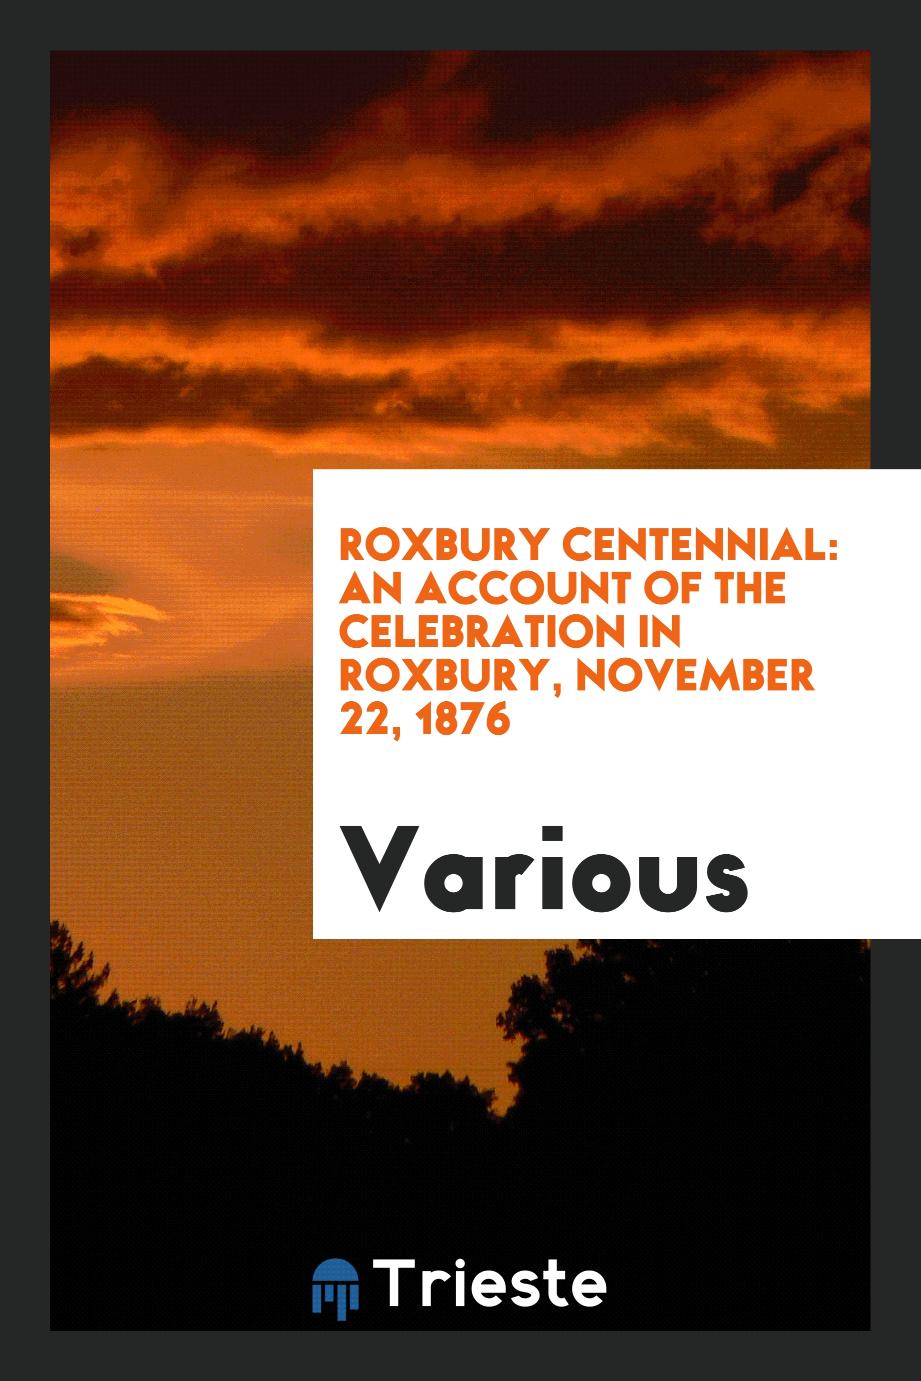 Roxbury Centennial: An Account of the Celebration in Roxbury, November 22, 1876